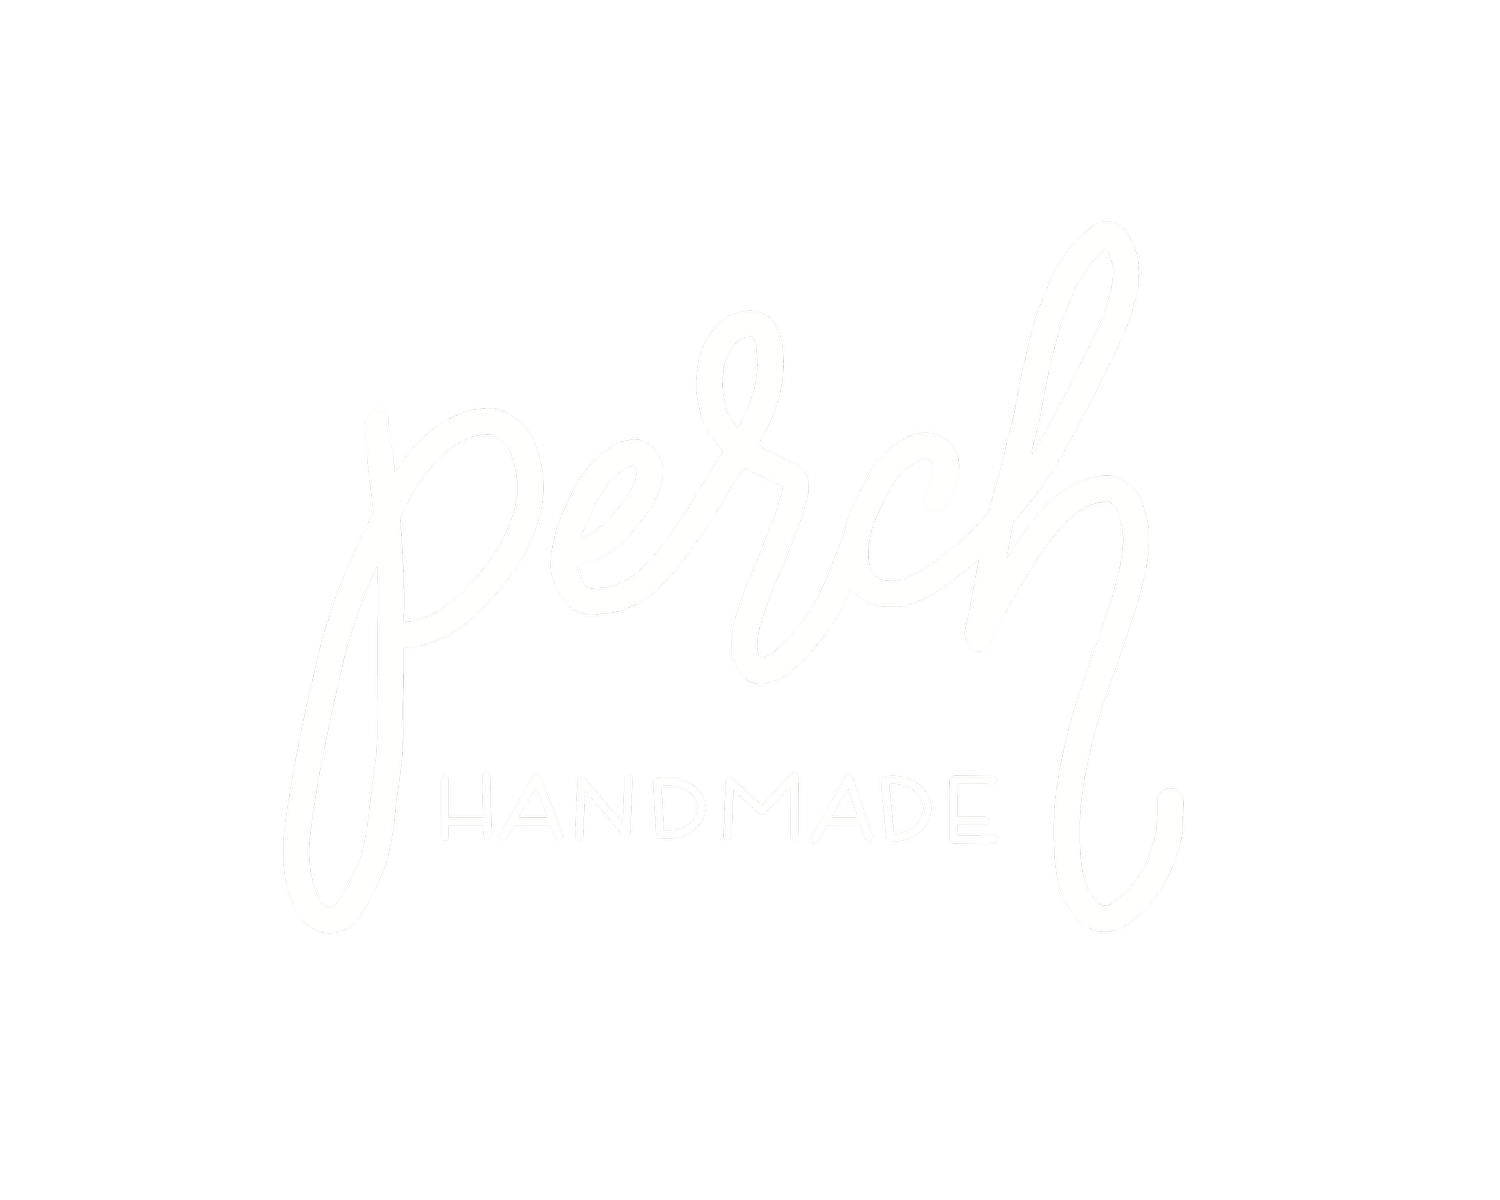 Perch Handmade